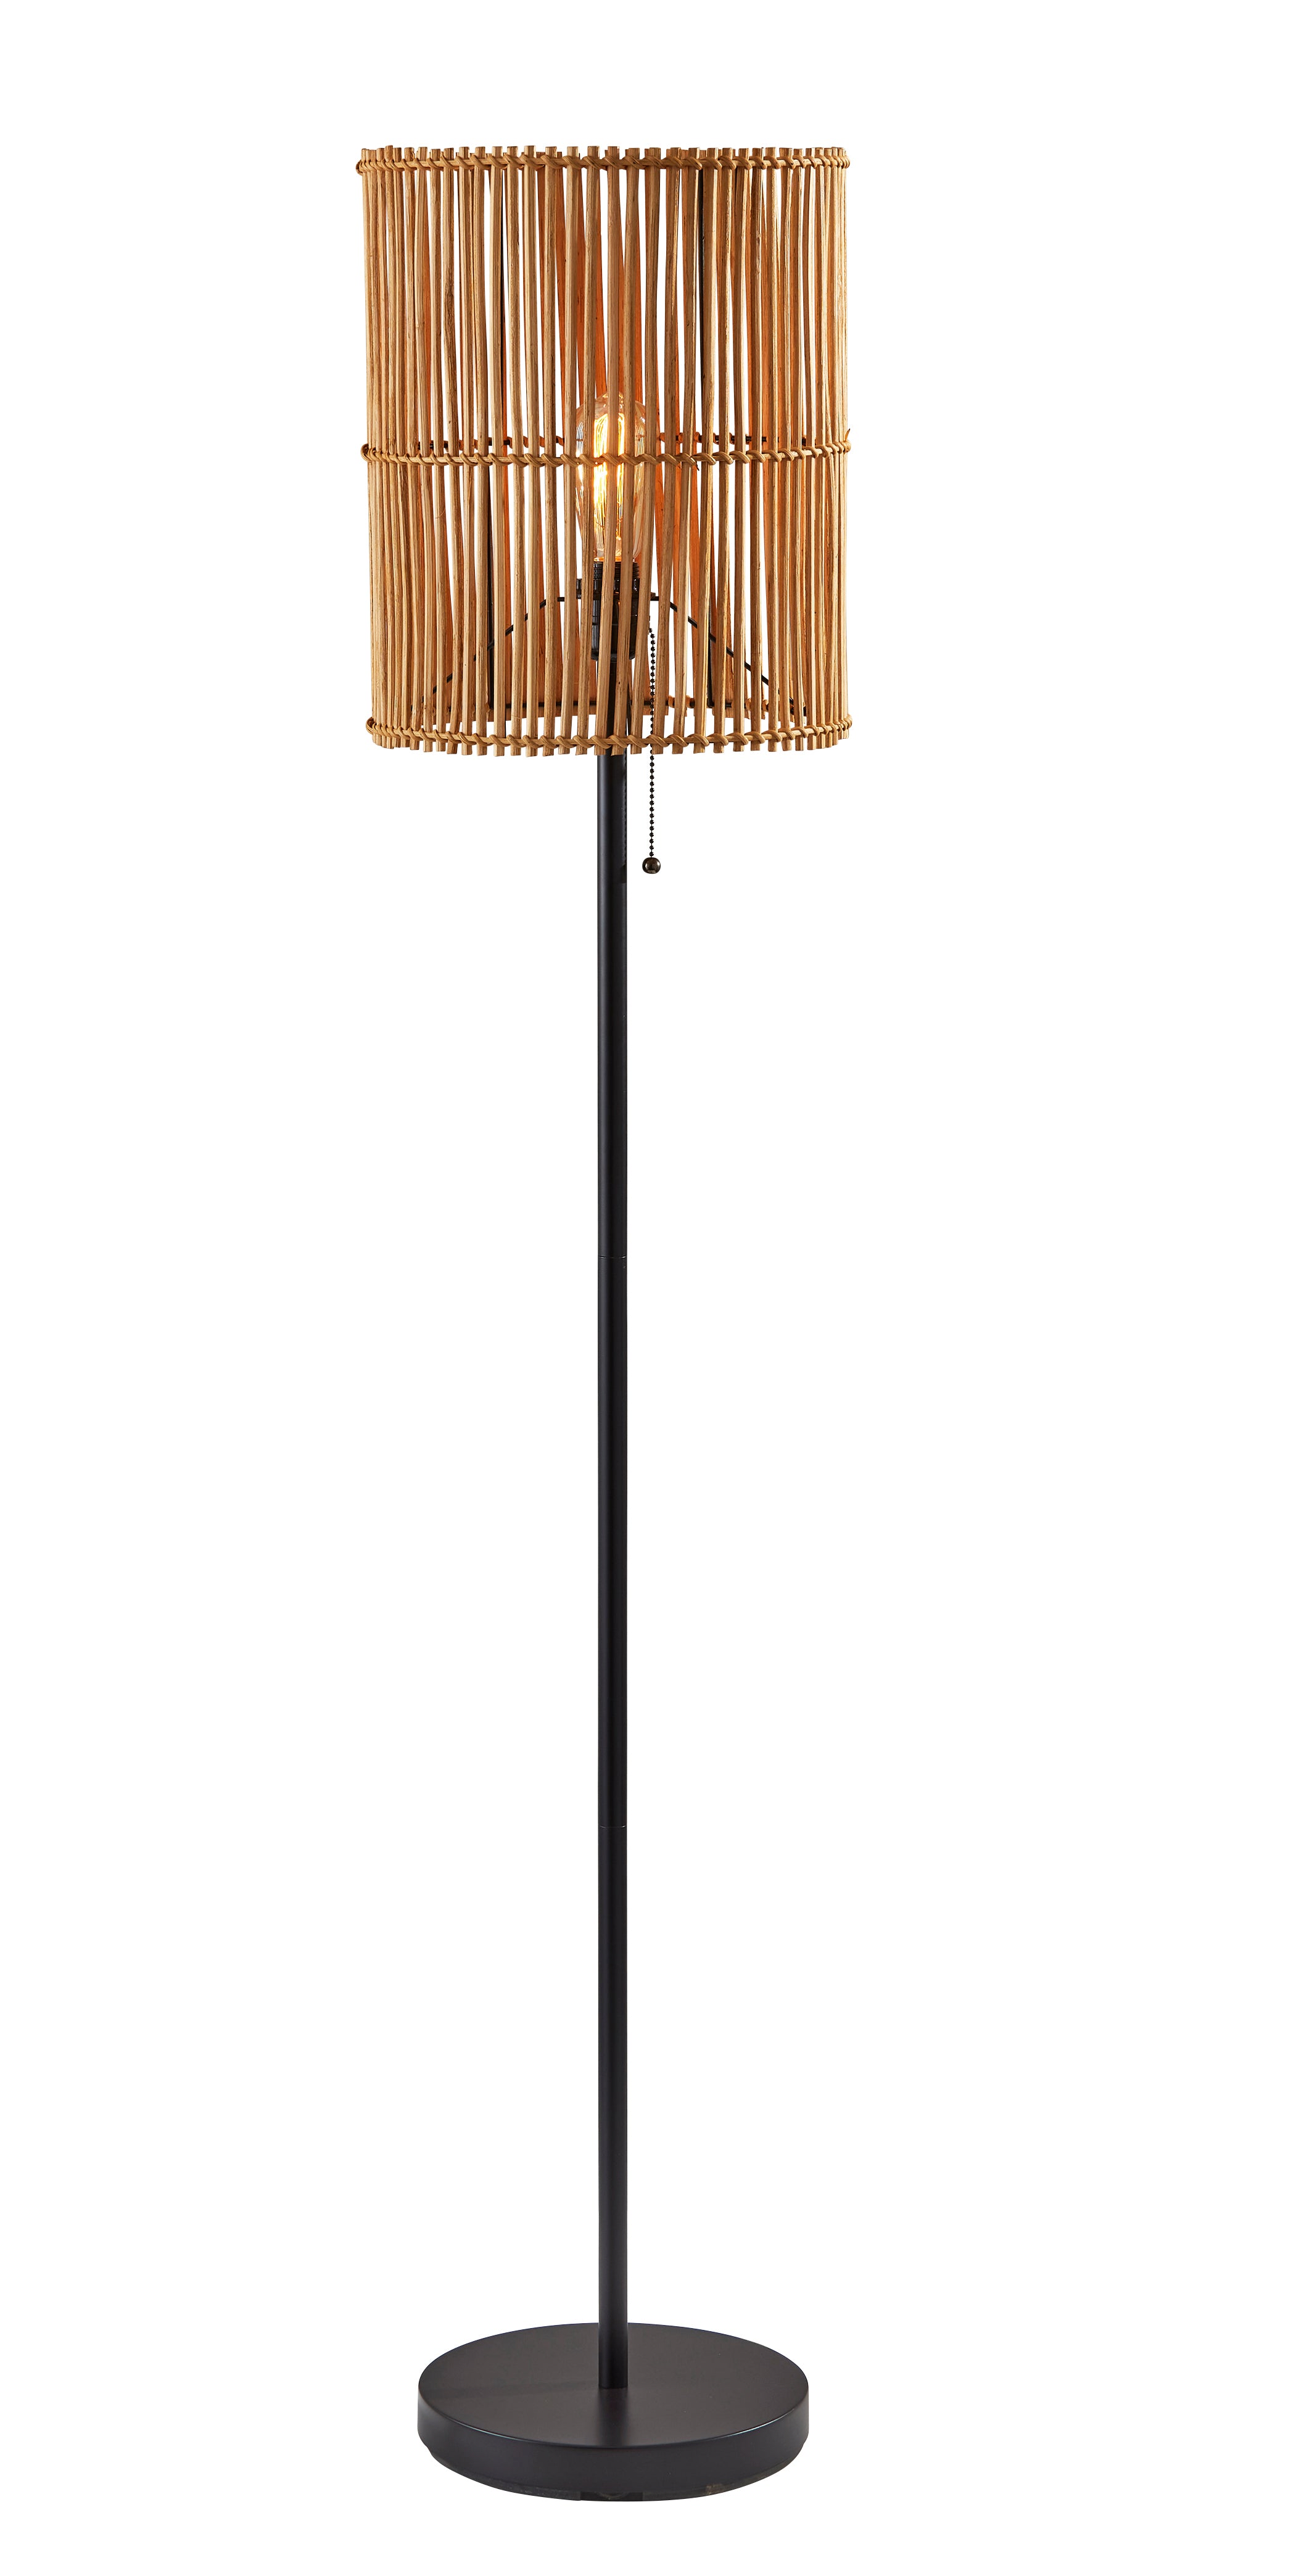 CABANA Floor lamp Bronze - 4198-12 | ADESSO